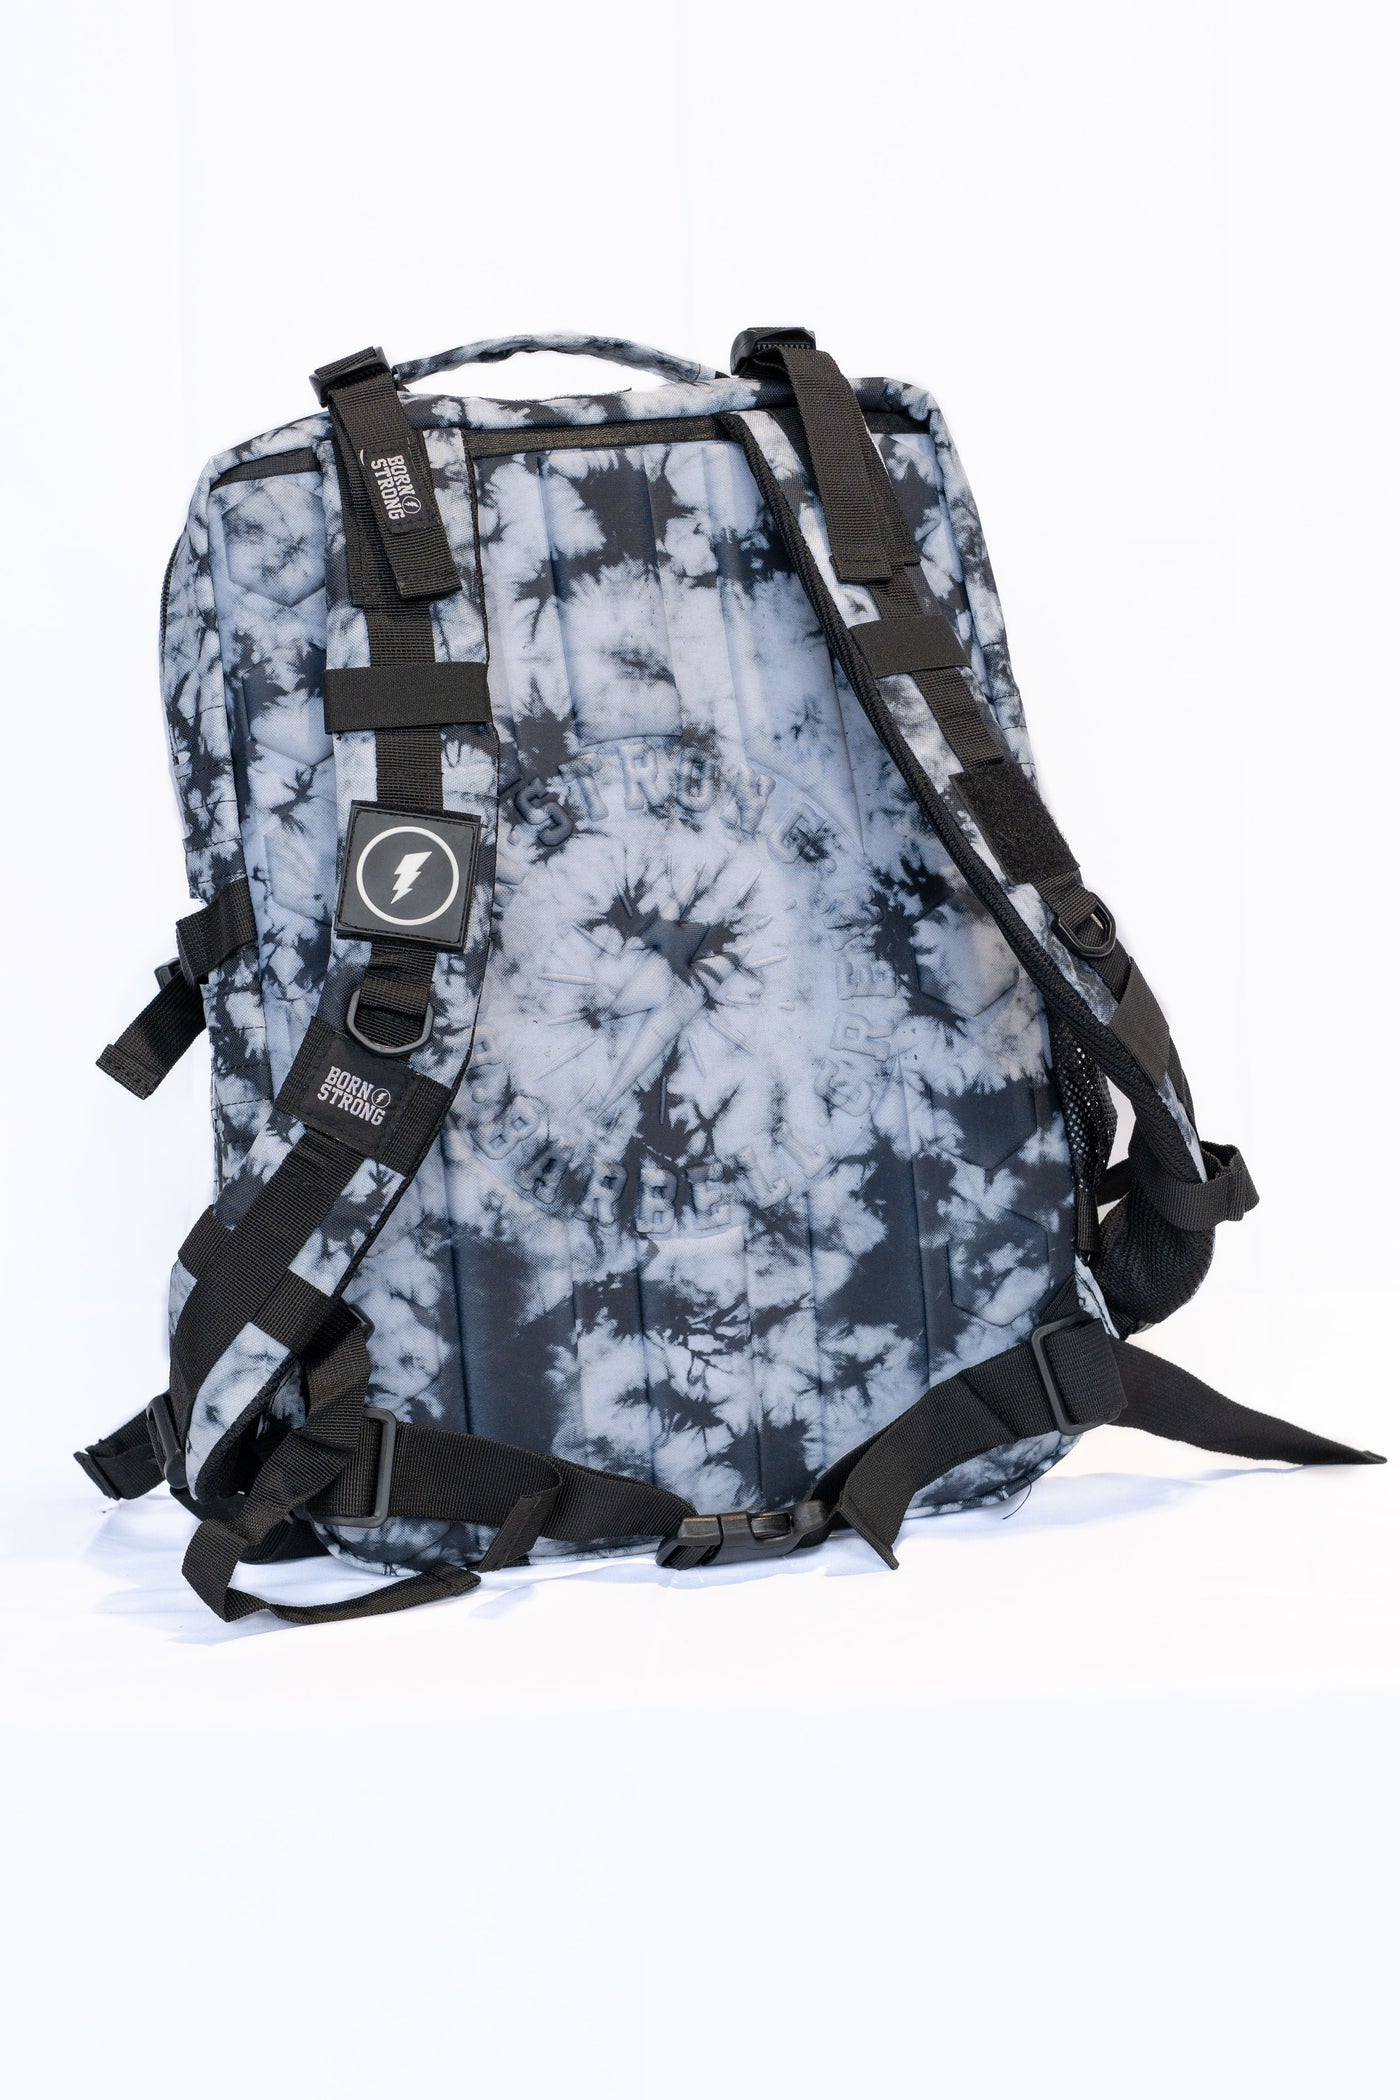 ATHLETE backpack